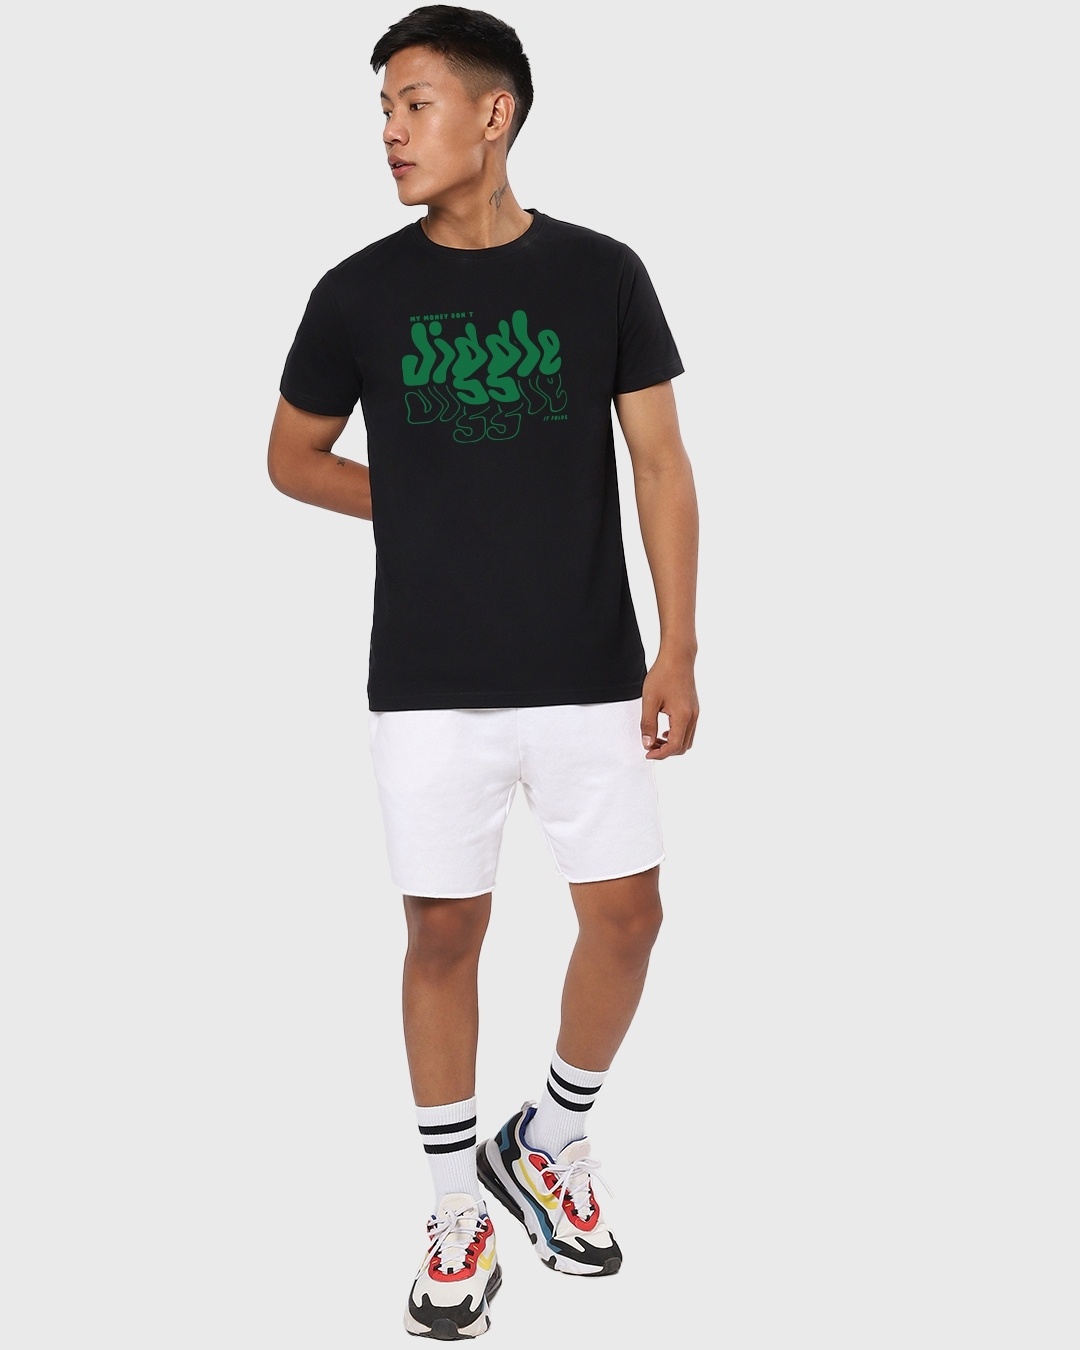 Jiggly Black Men's Graphic T-Shirt – iEDM